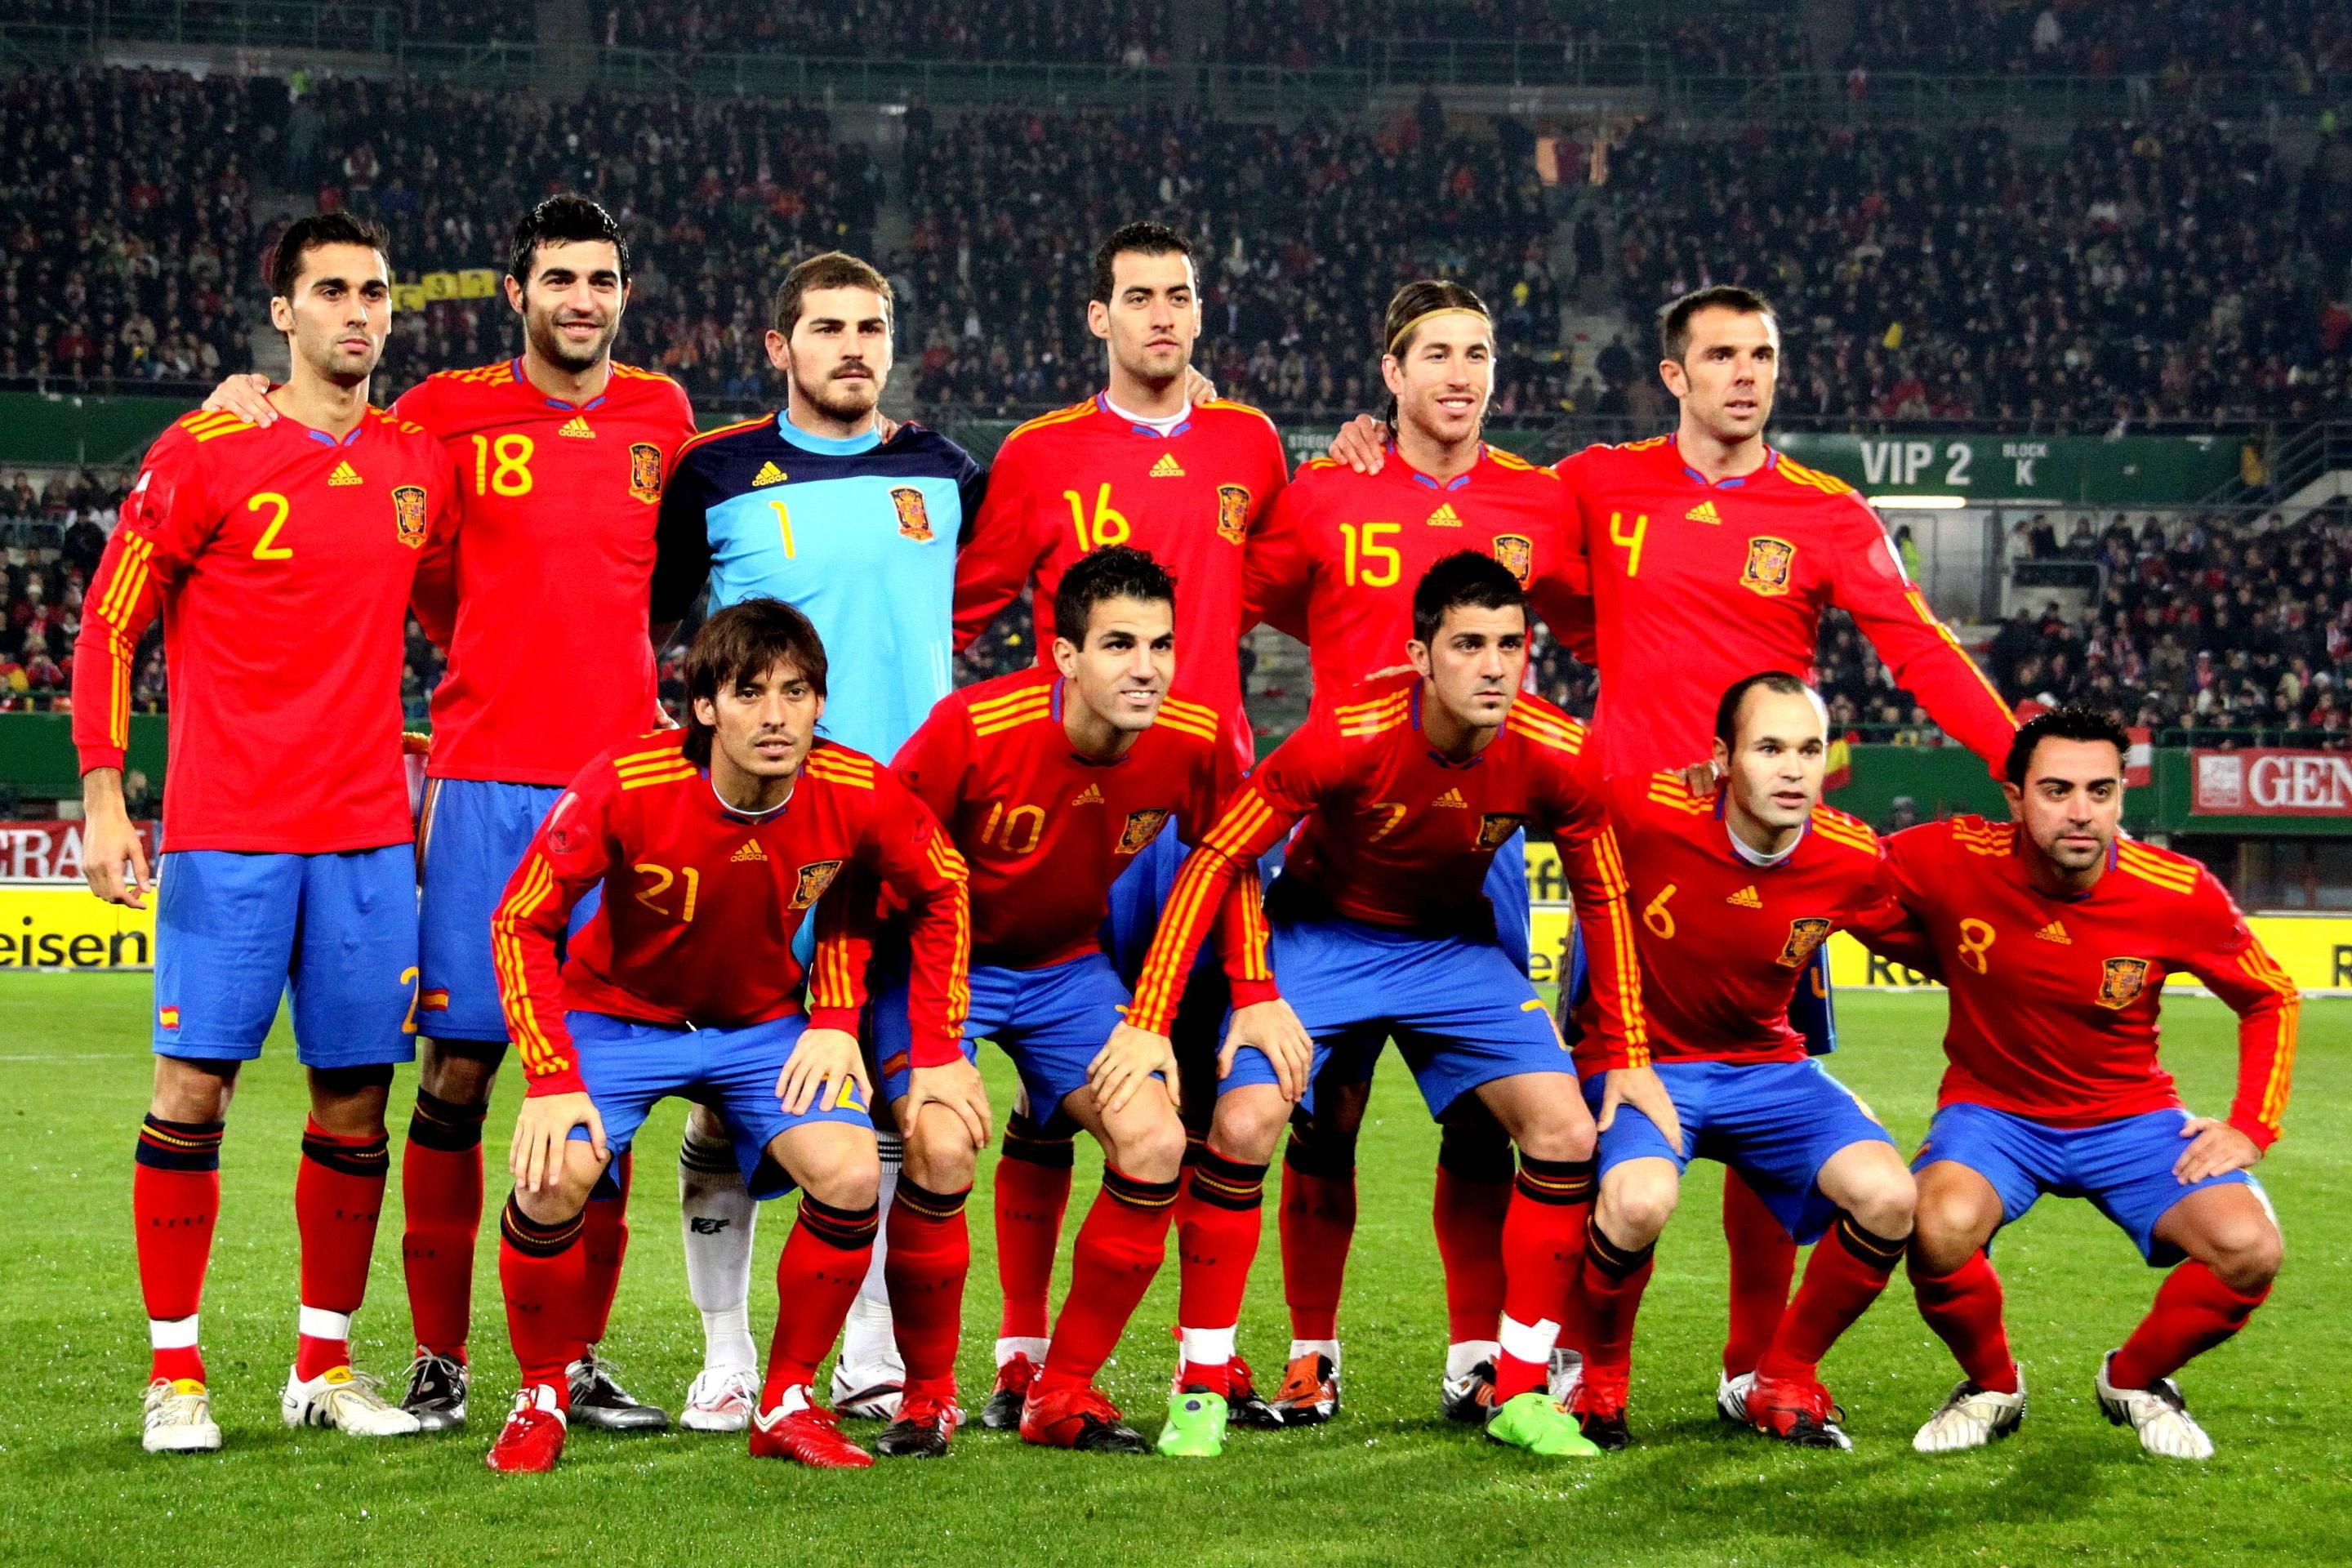 Spain Football Team HD Images Find best latest Spain Football Team